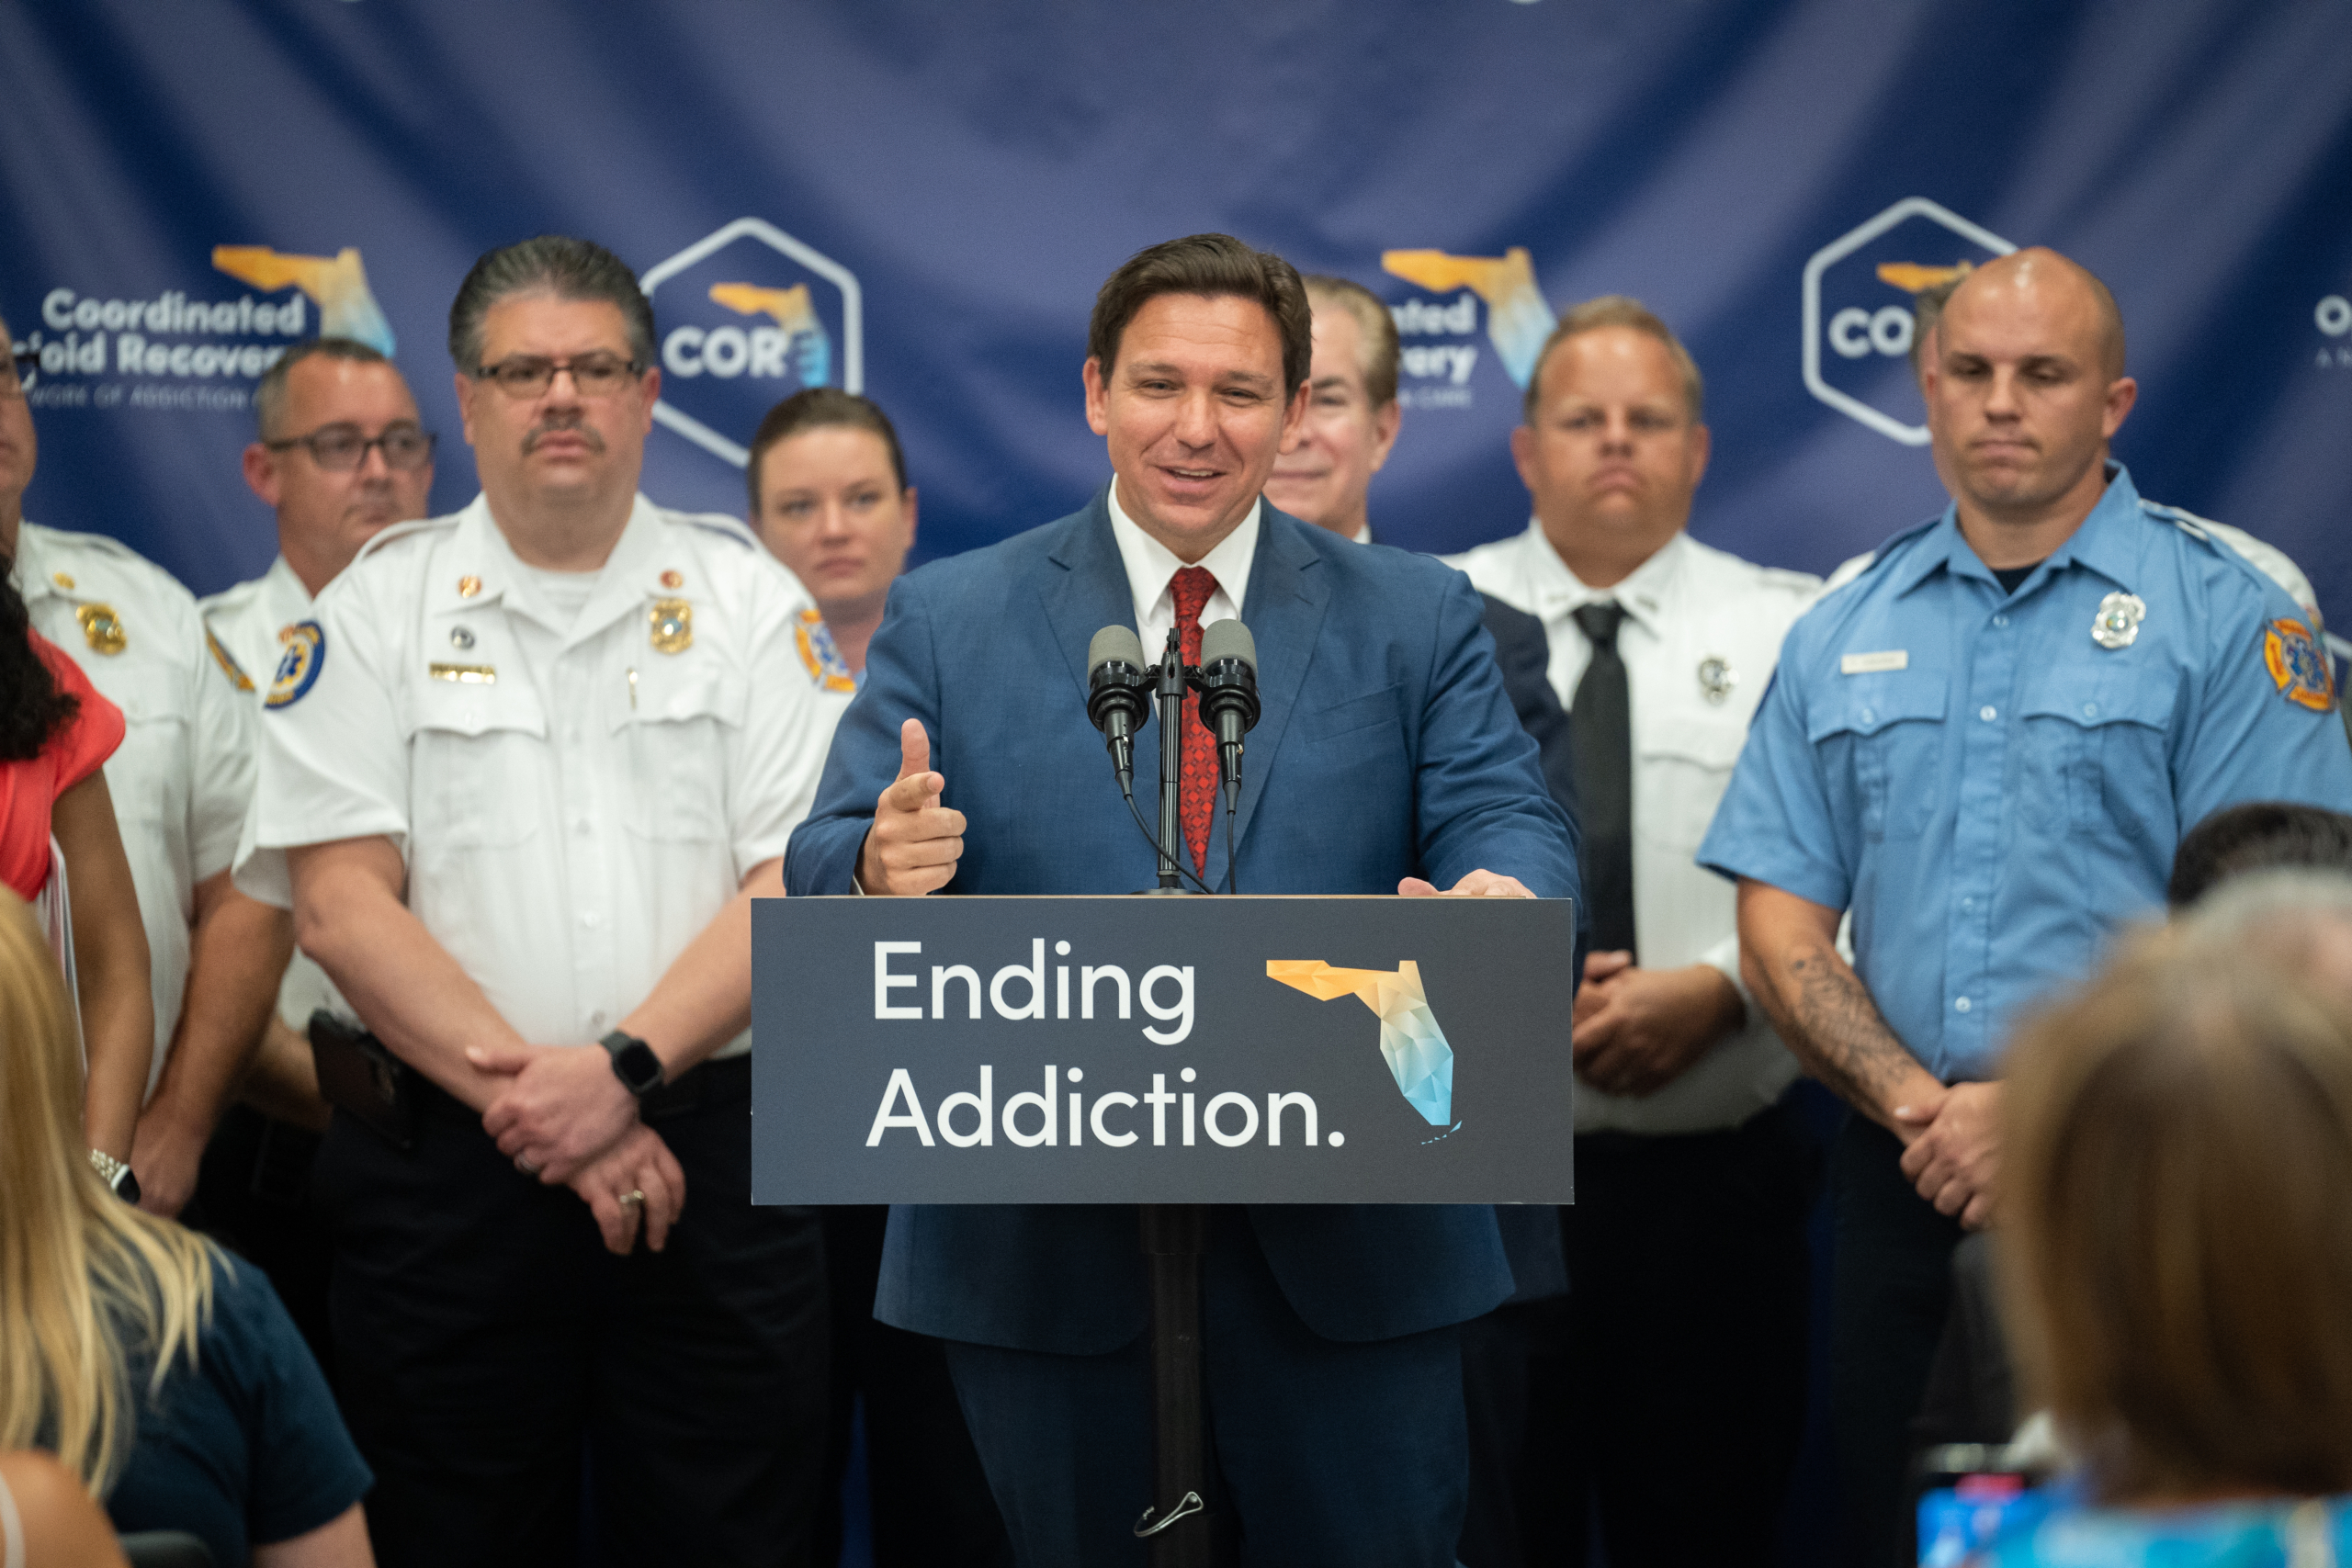 Governor Ron DeSantis Announces New Opioid Recovery Program in Florida